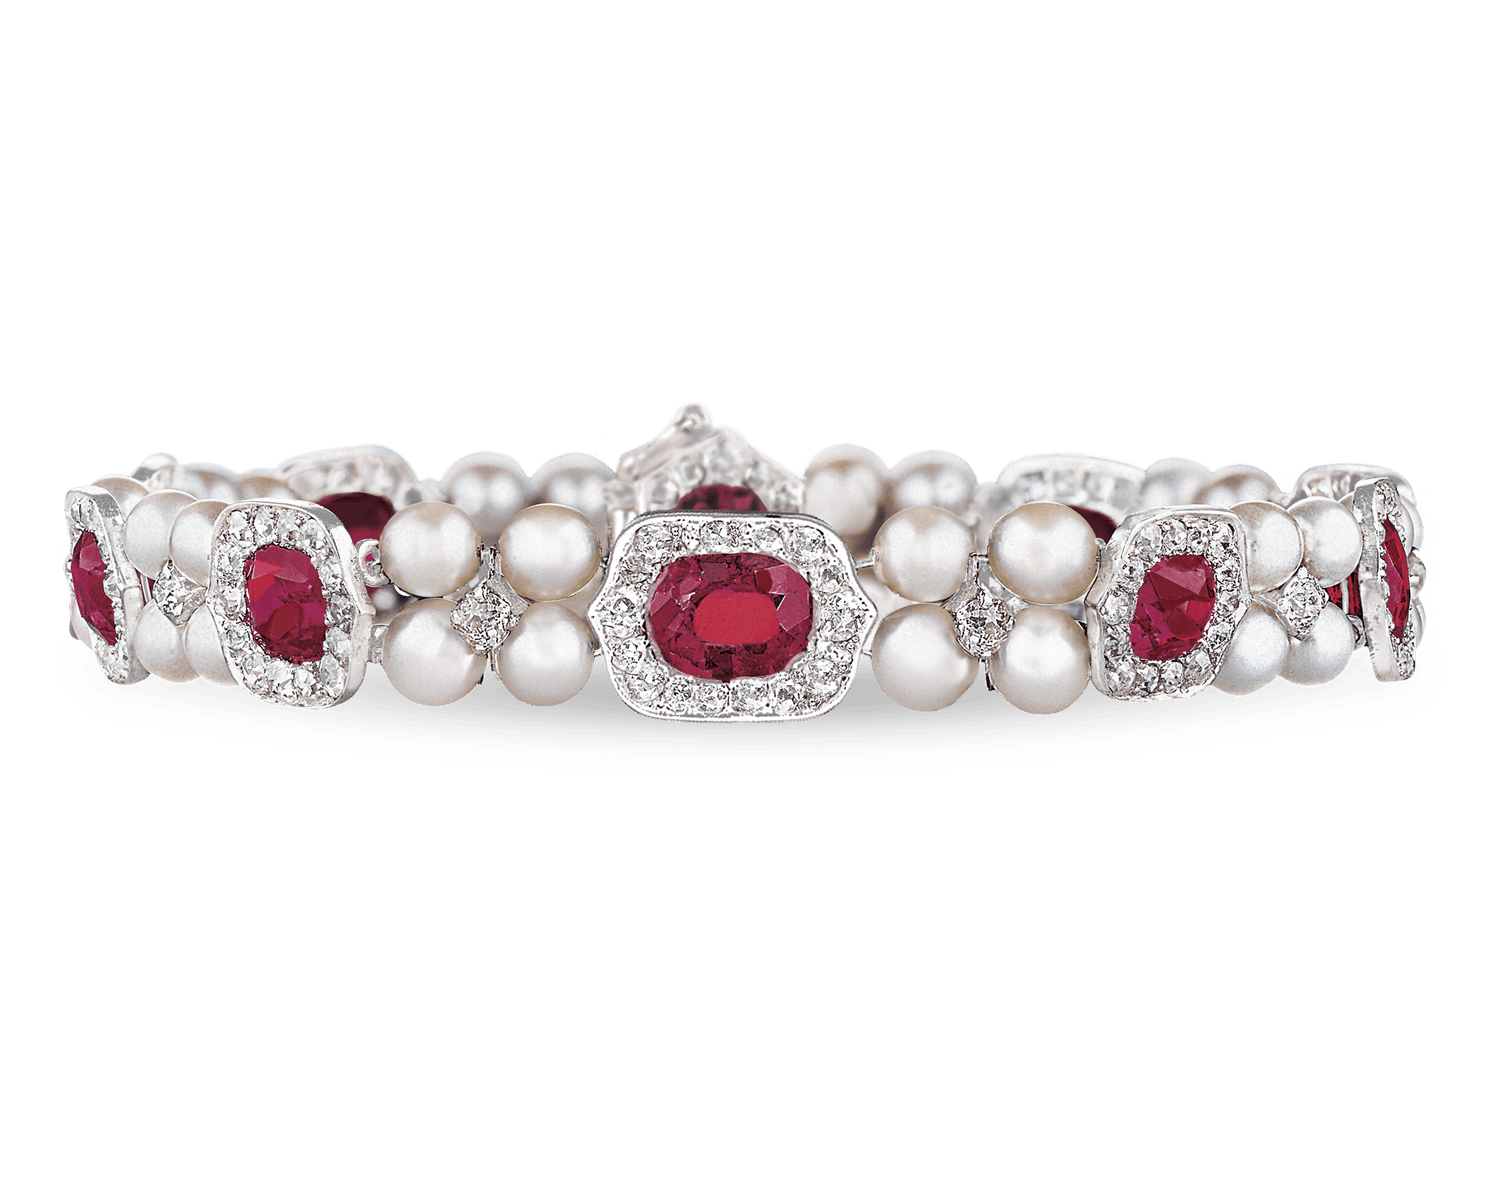 Ten untreated Burma rubies showcase their perfect pigeon-blood hue in this bracelet